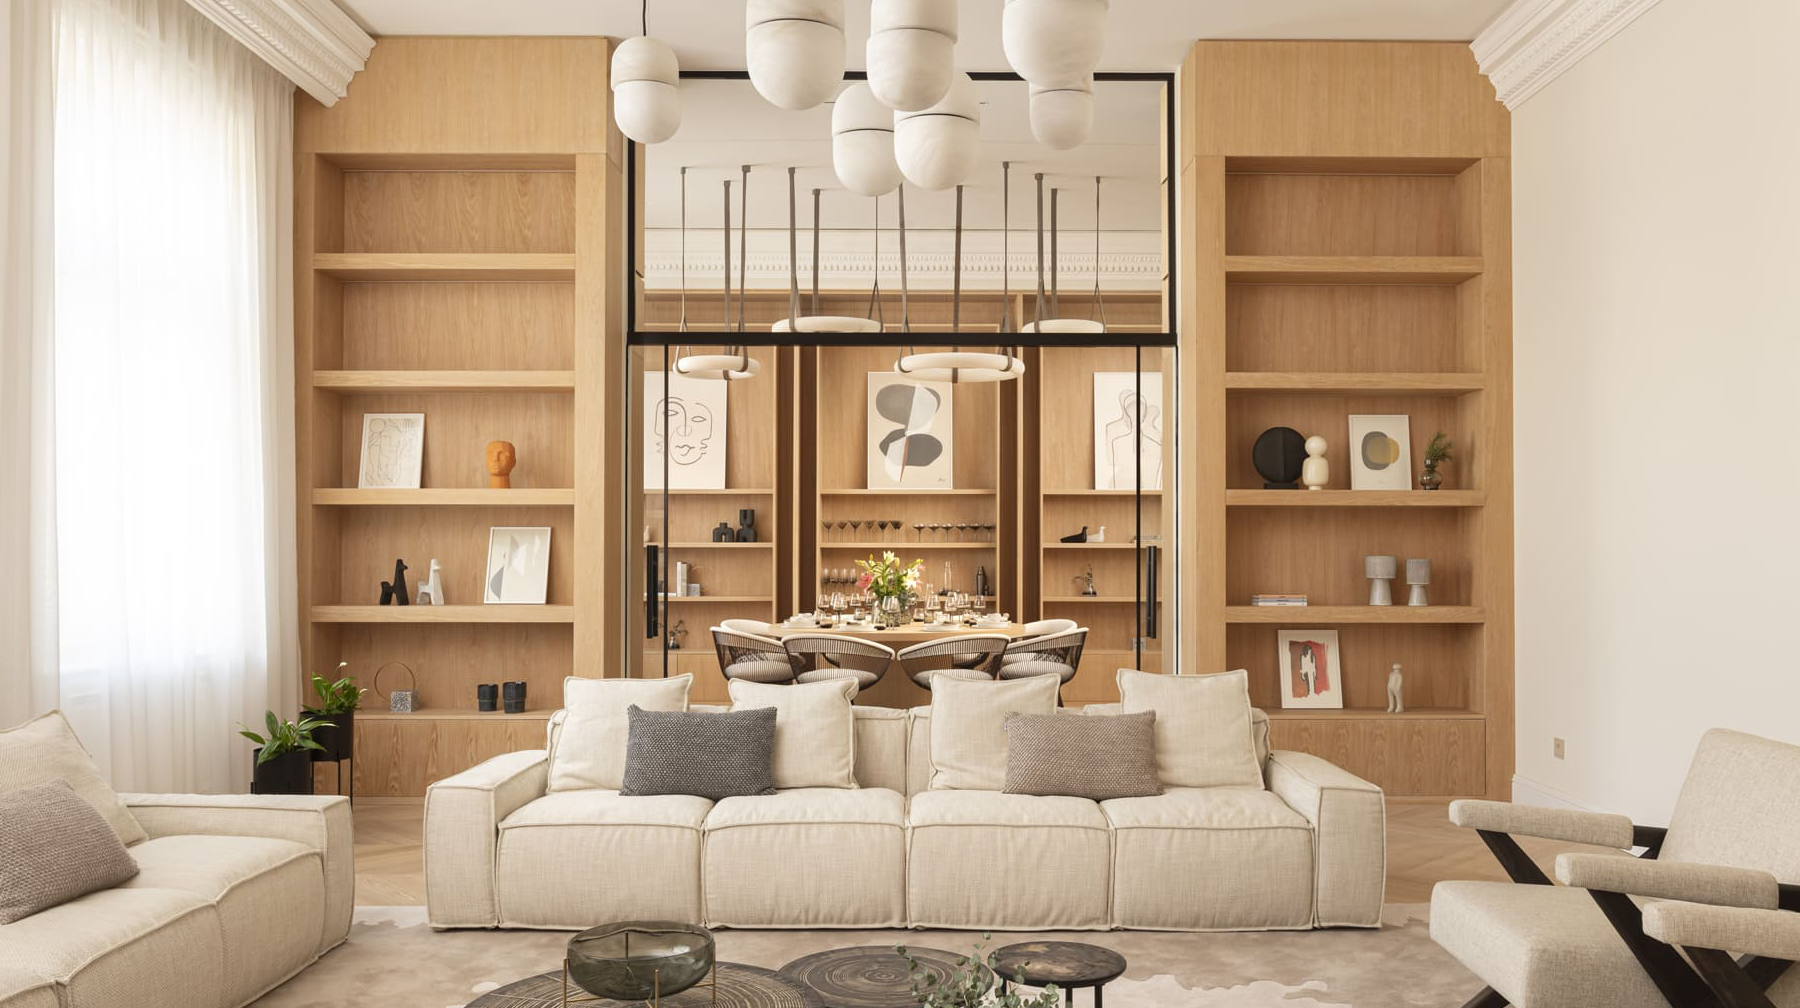 Solinfo Lighting & Home: Interiors For Living